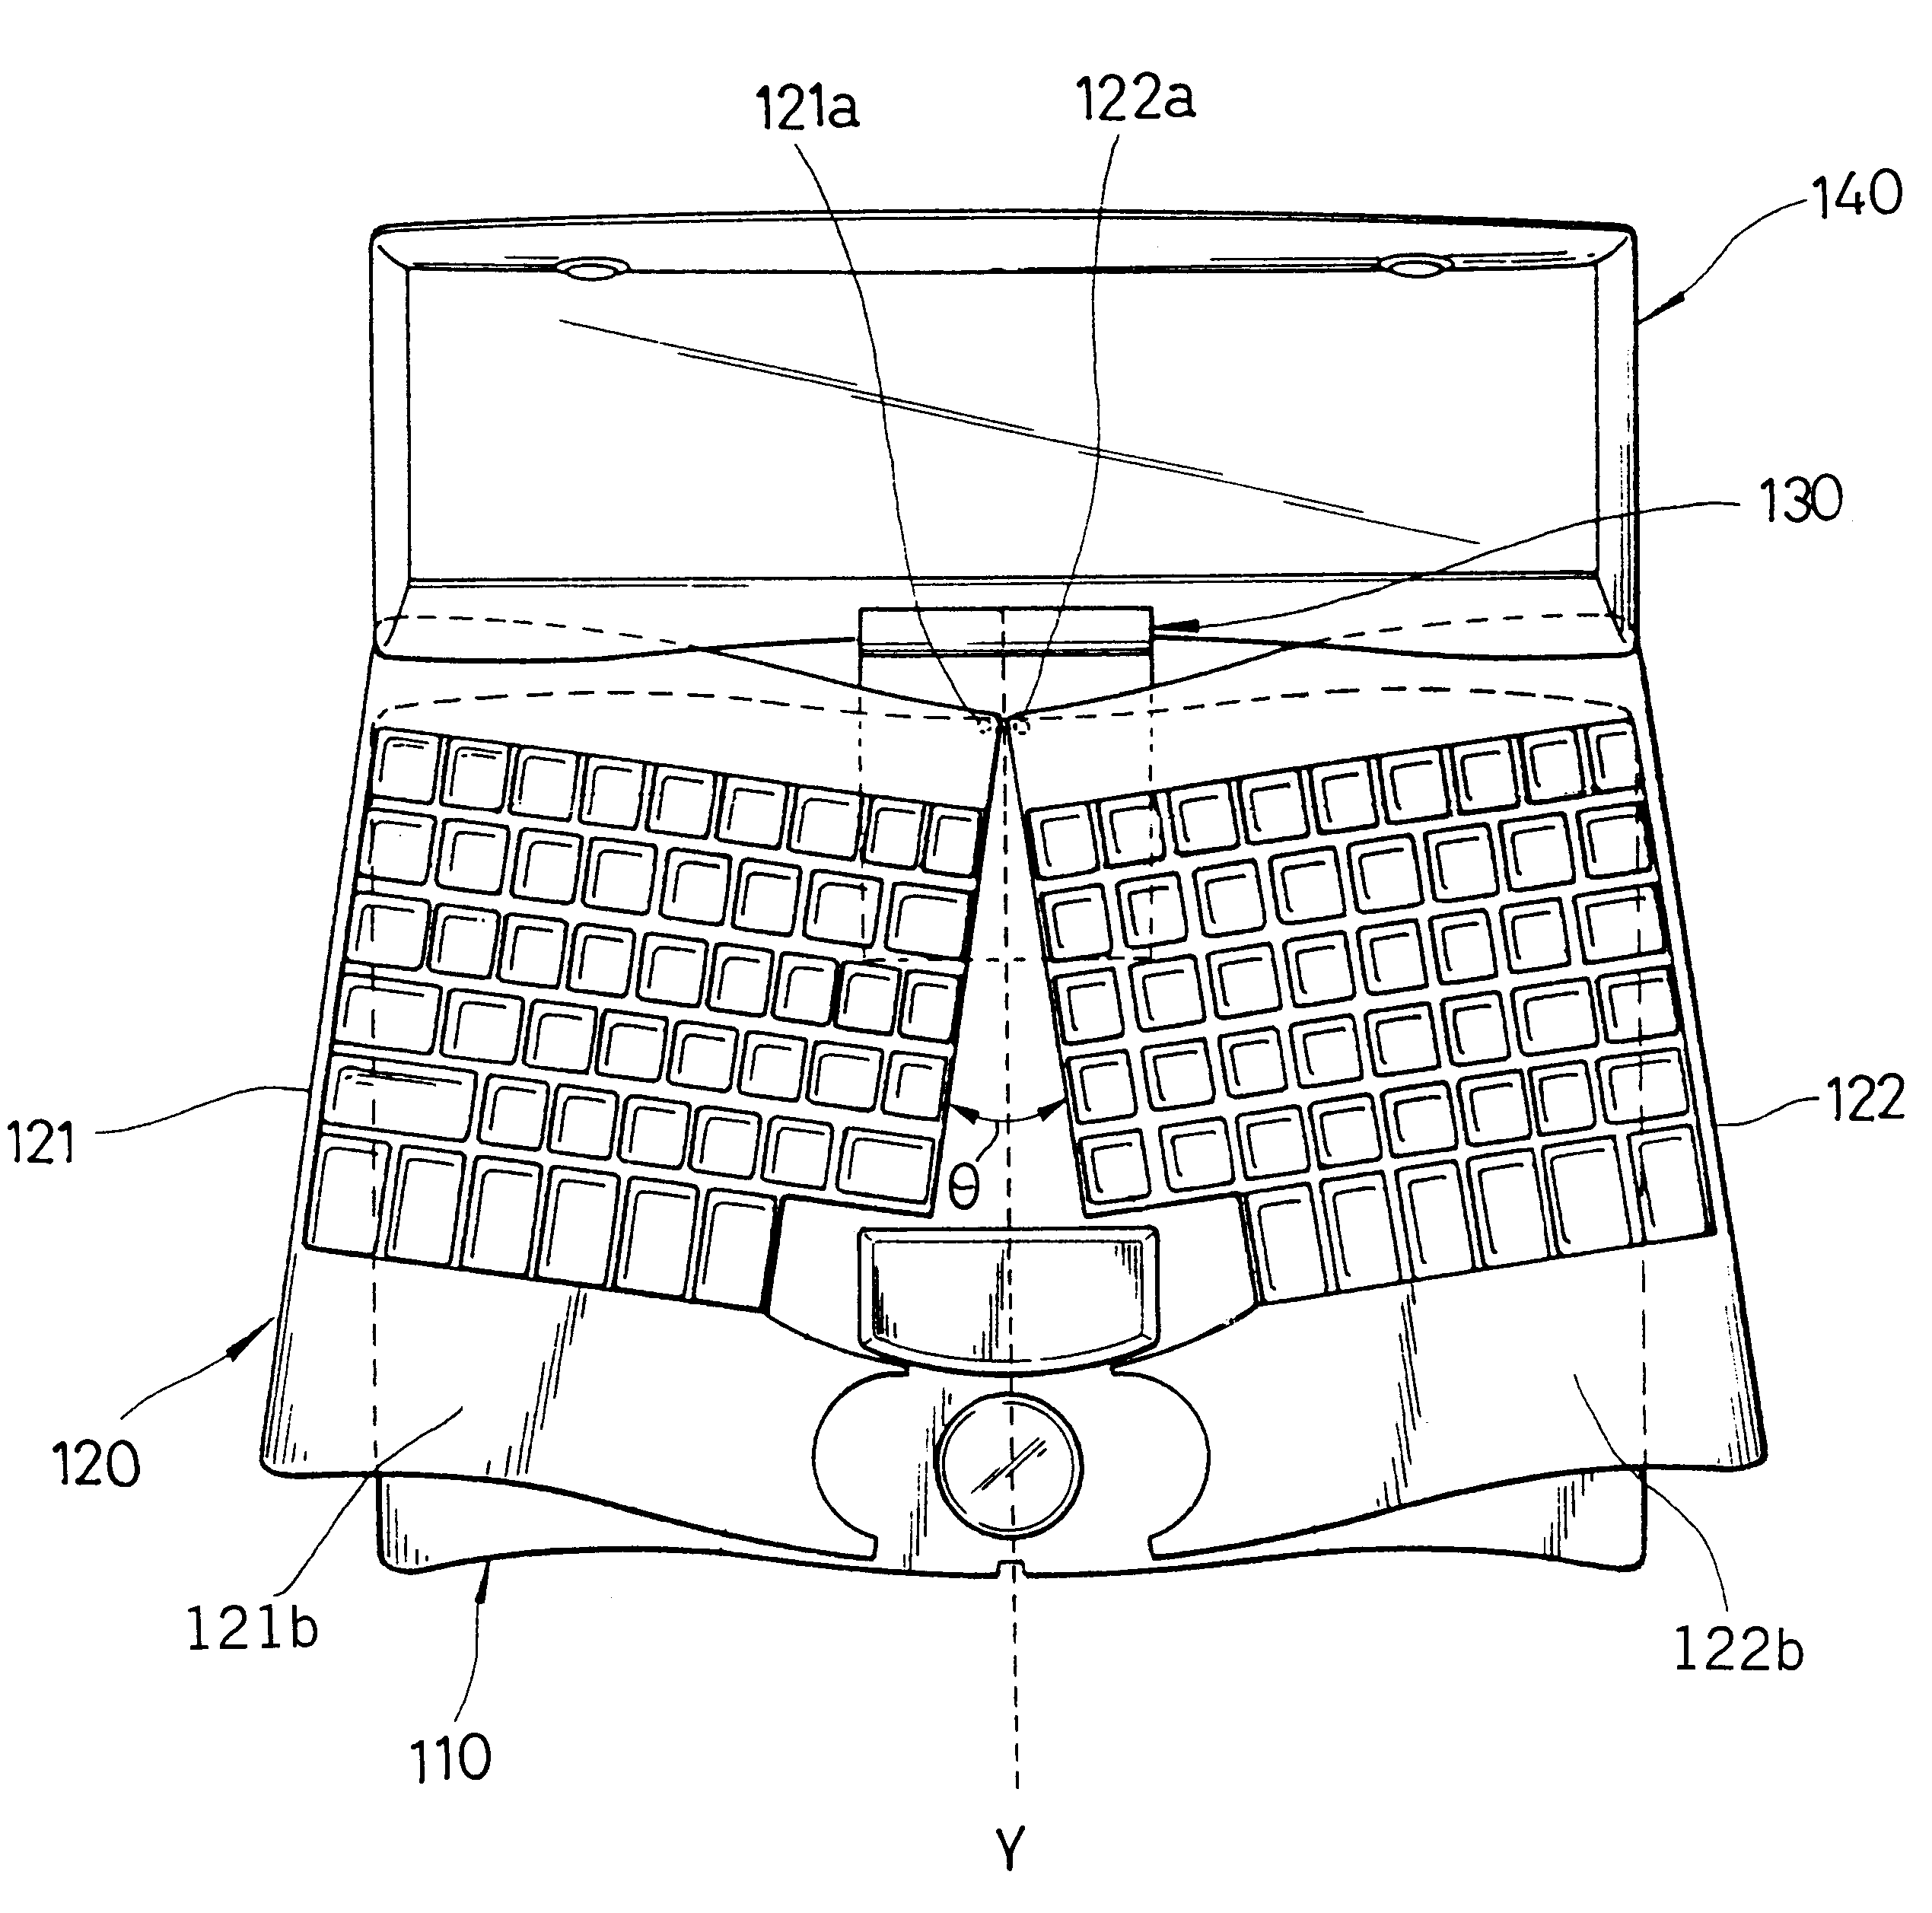 Portable computer system having ergonomic keyboard and detachable display unit